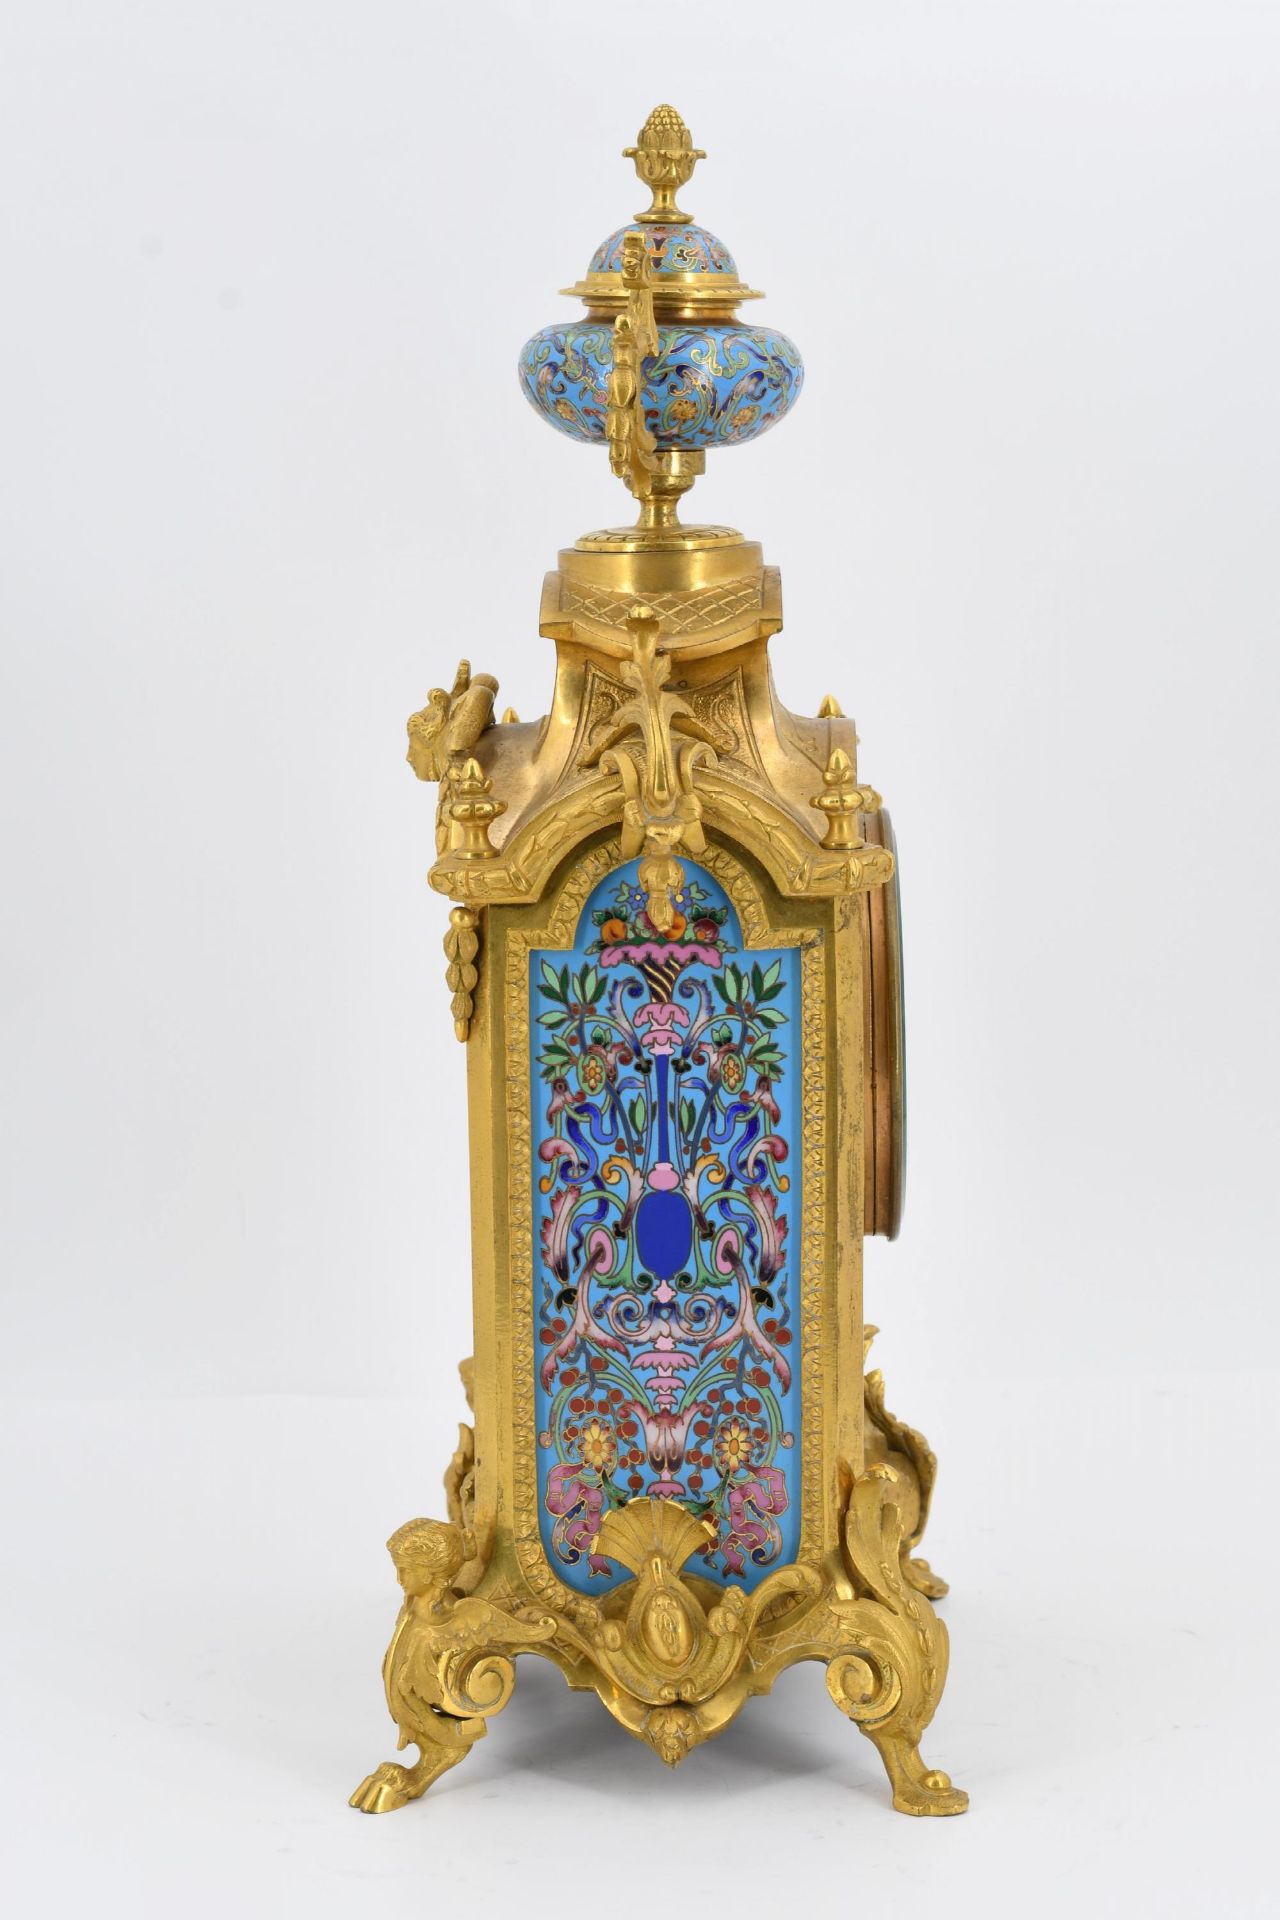 Pendulum clock with floral enamel décor - Image 5 of 5